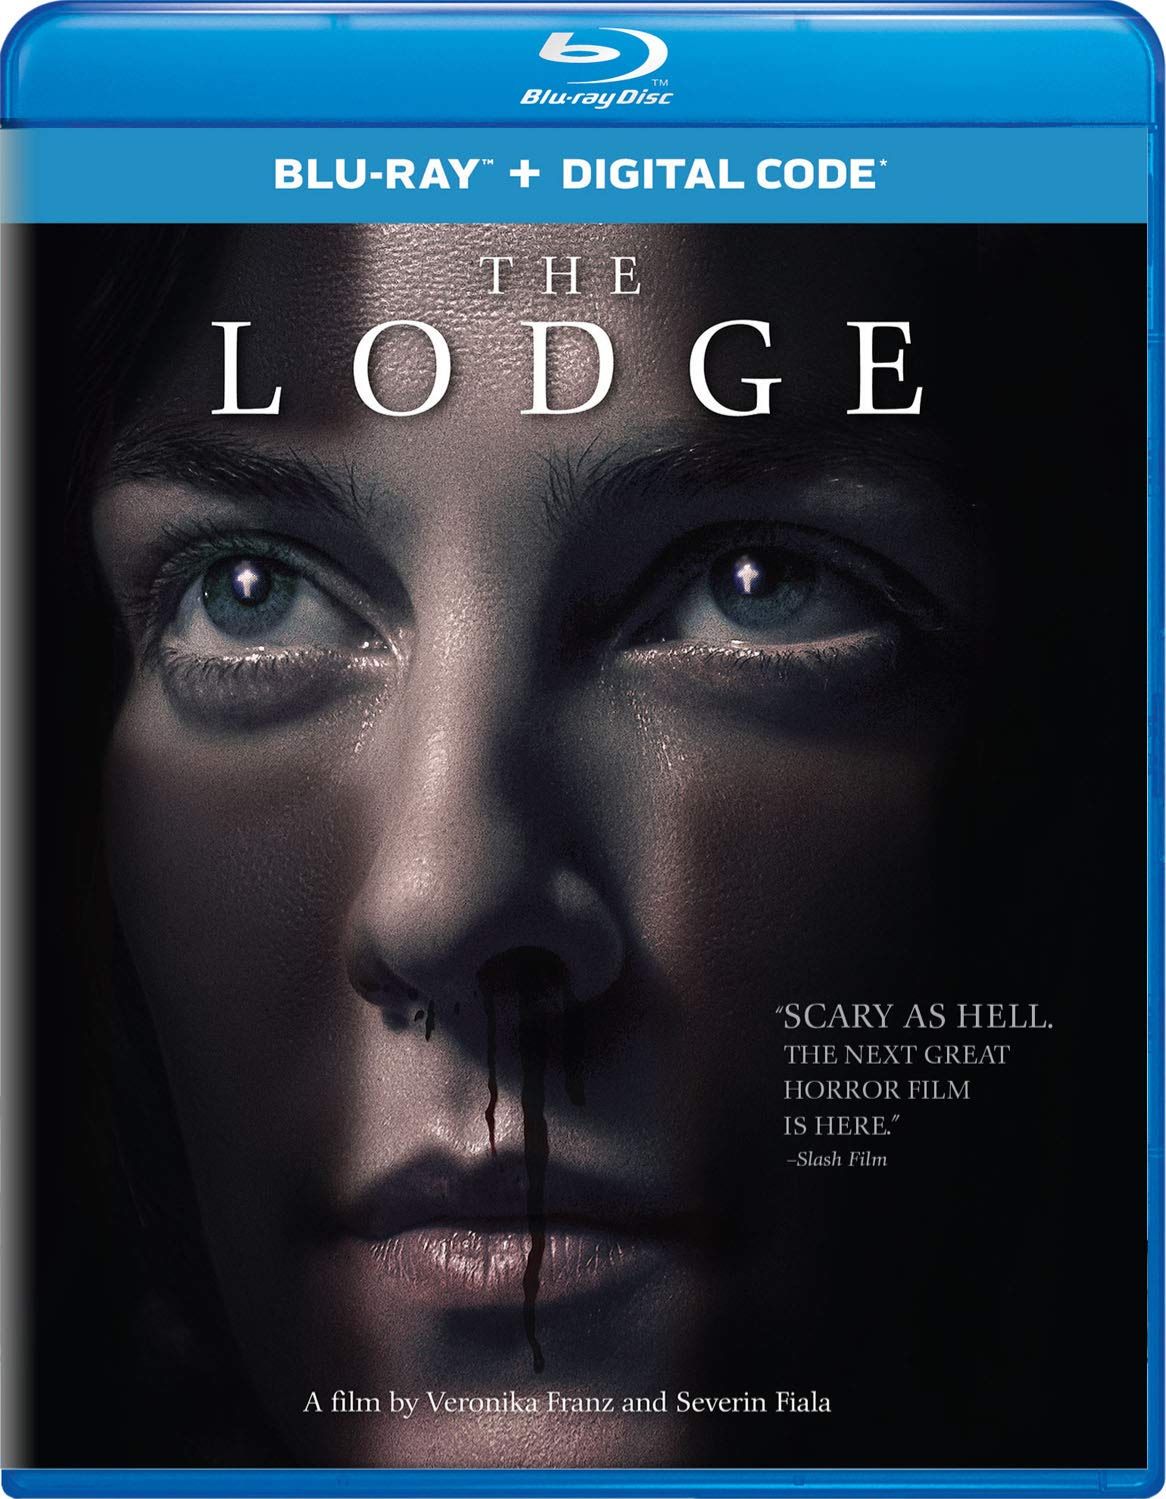 The Lodge blu-ray